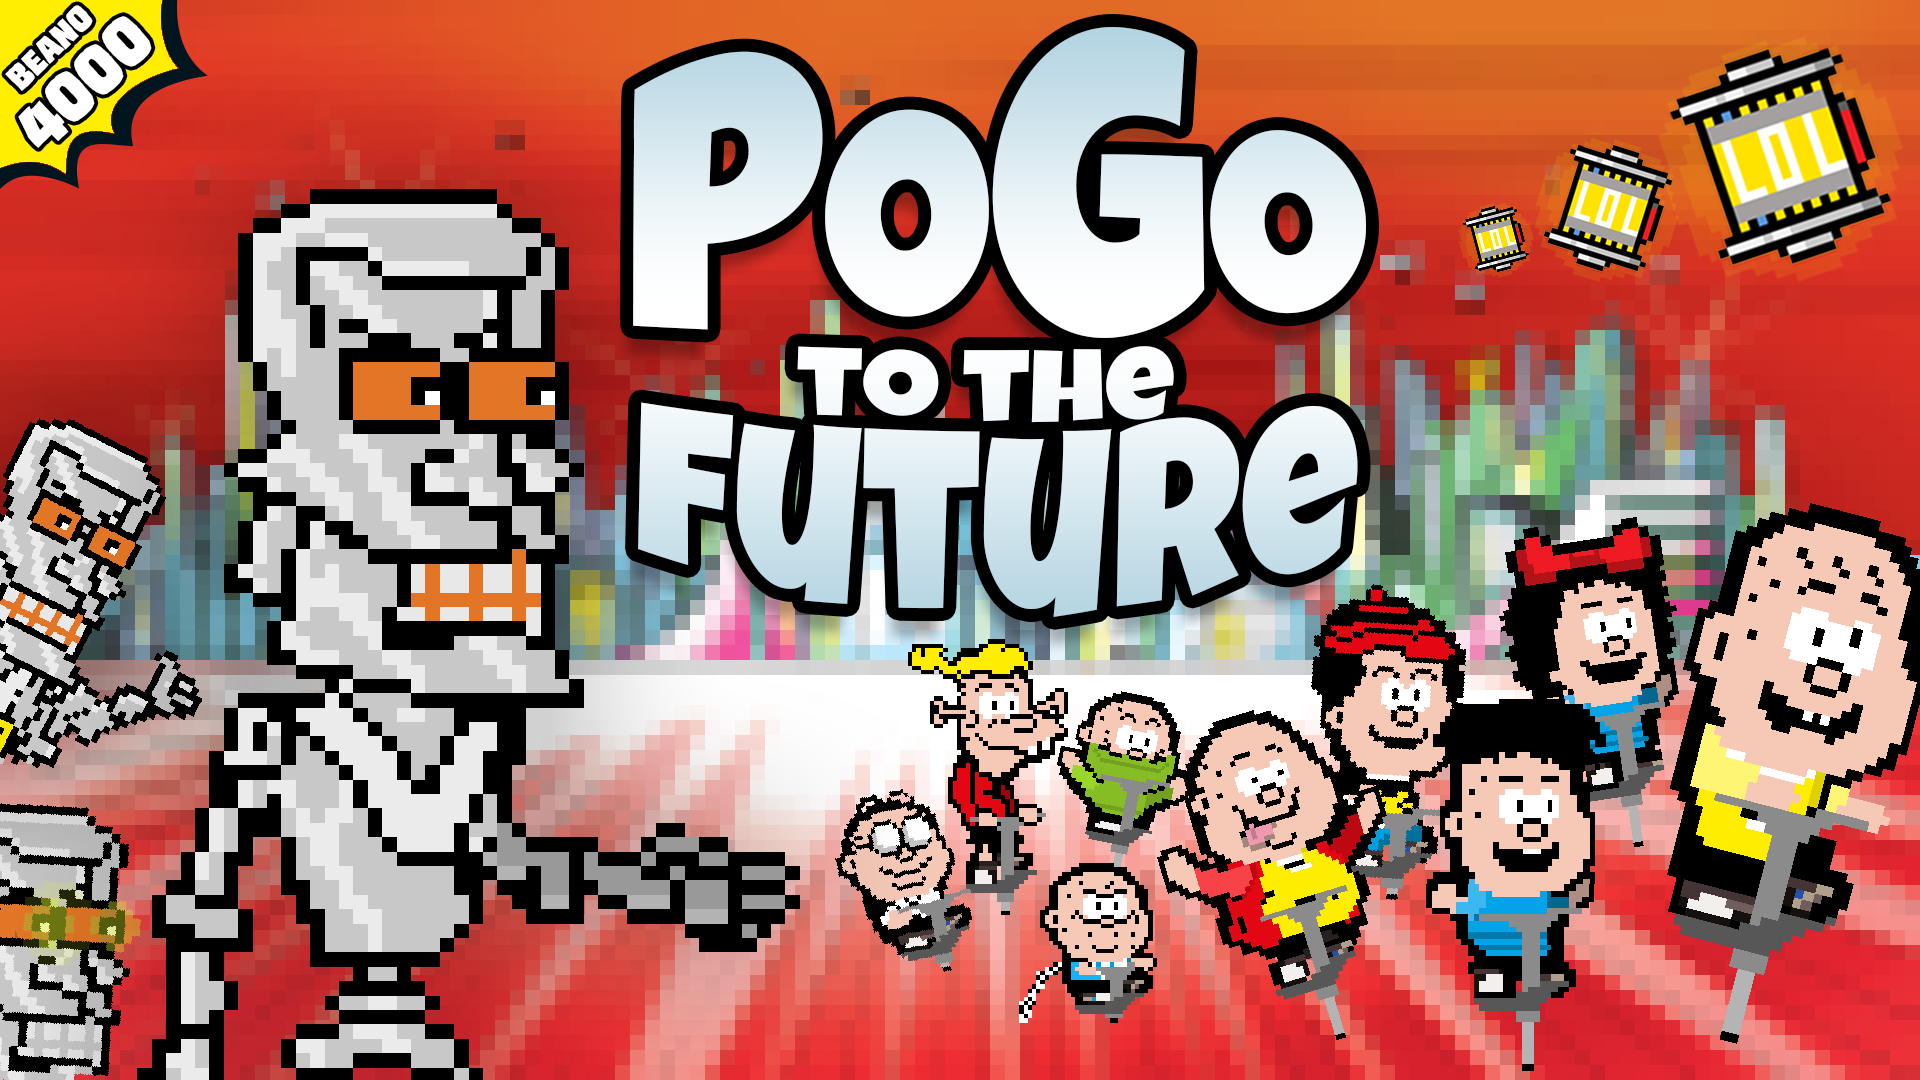 Beano 4000: PoGo to the Future